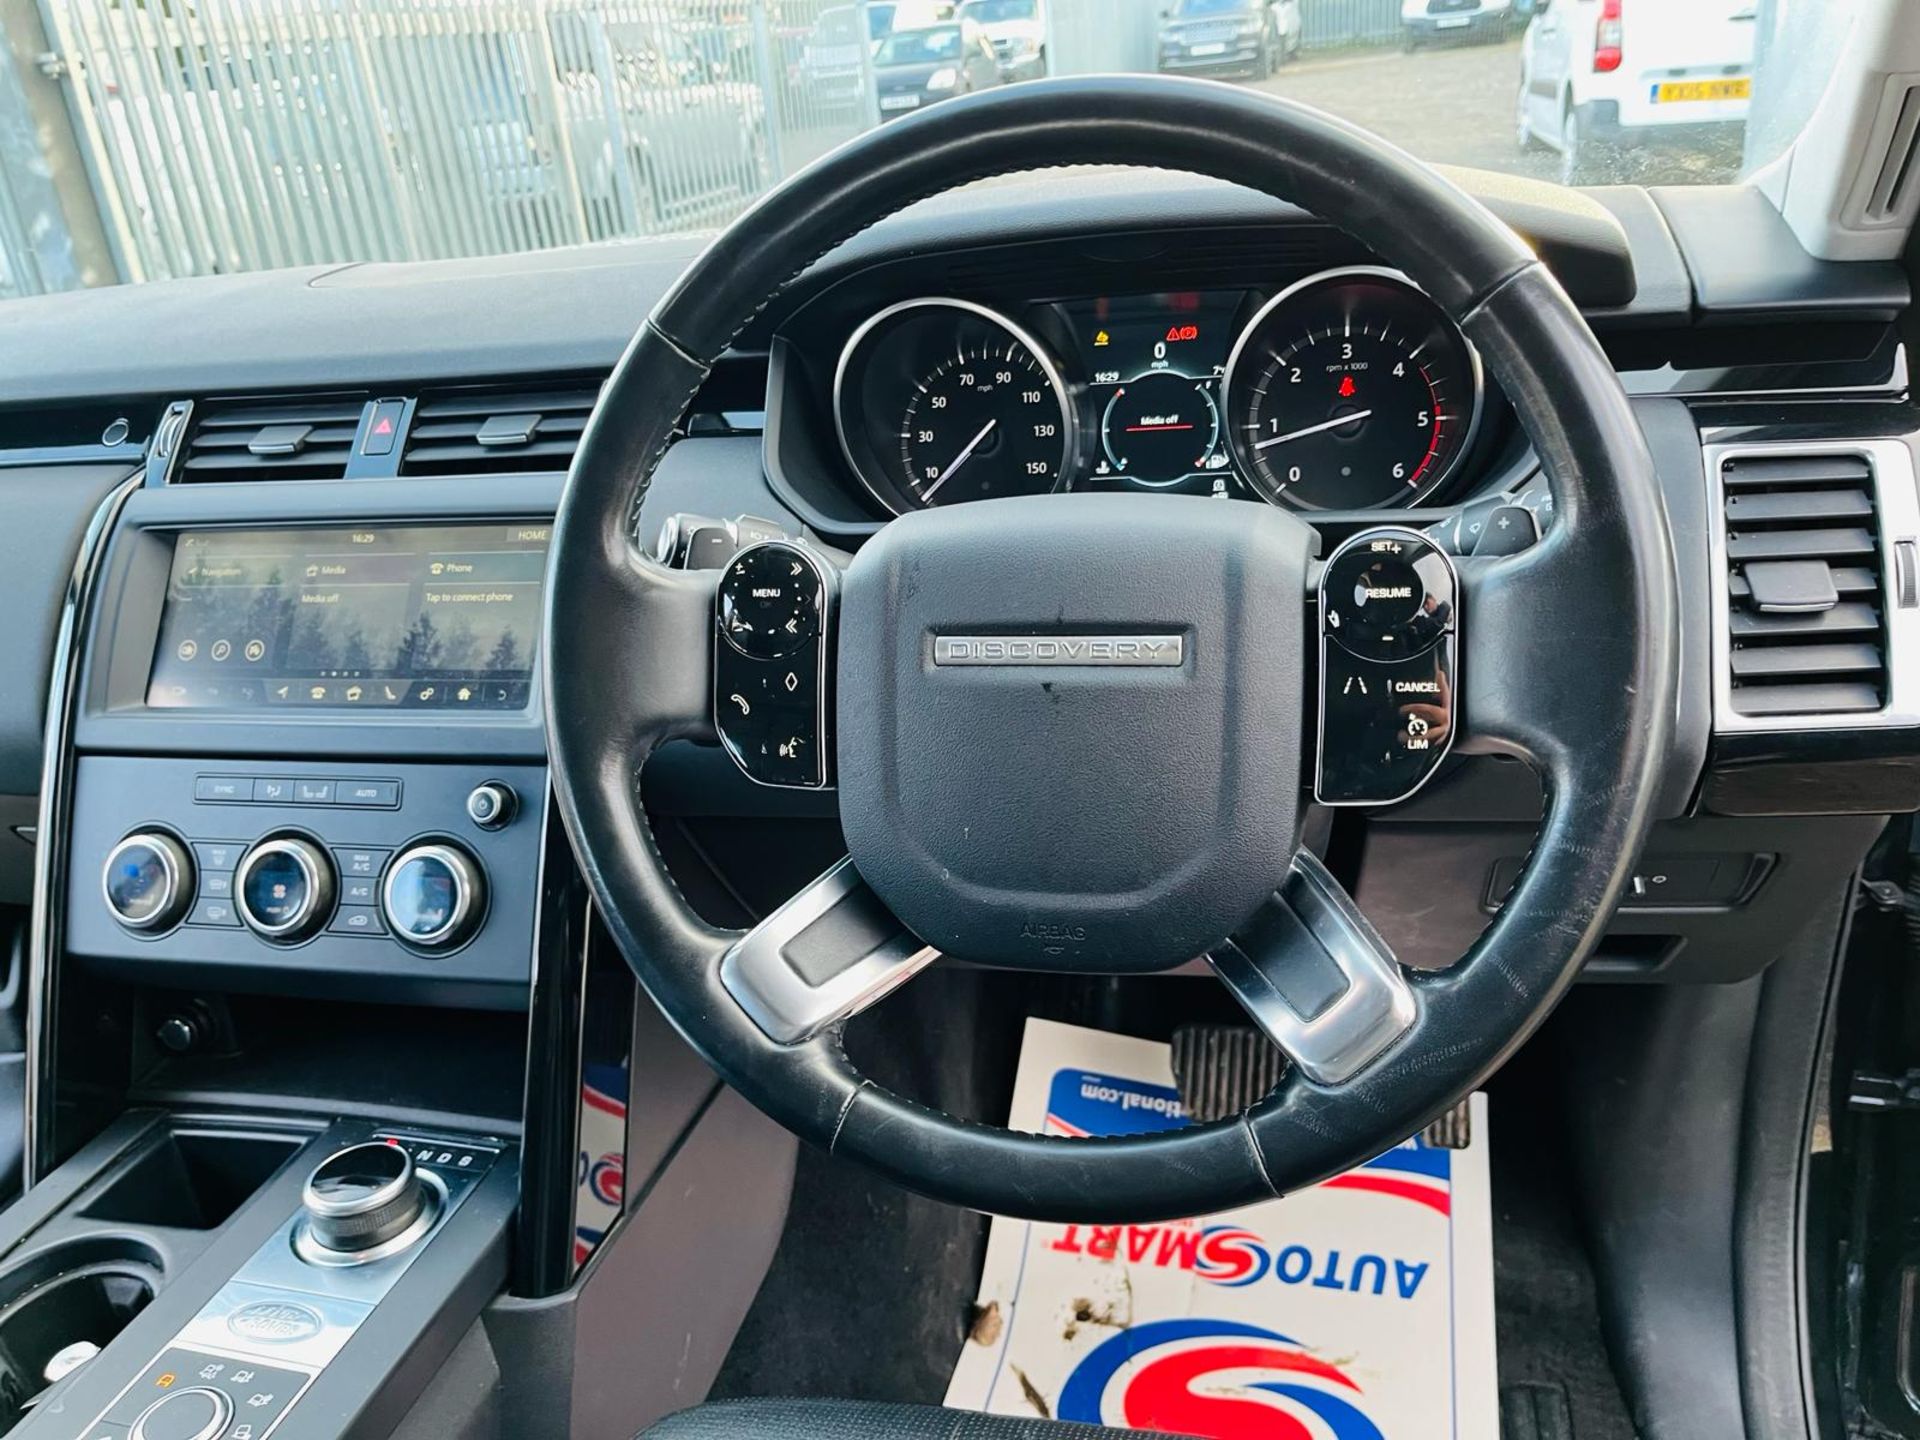 Land Rover Discovery 306 SE Van 3.0 SD6 2019 '19 Reg' - A/C-Navigation-Alloy Wheels- ULEZ Compliant - Image 15 of 31